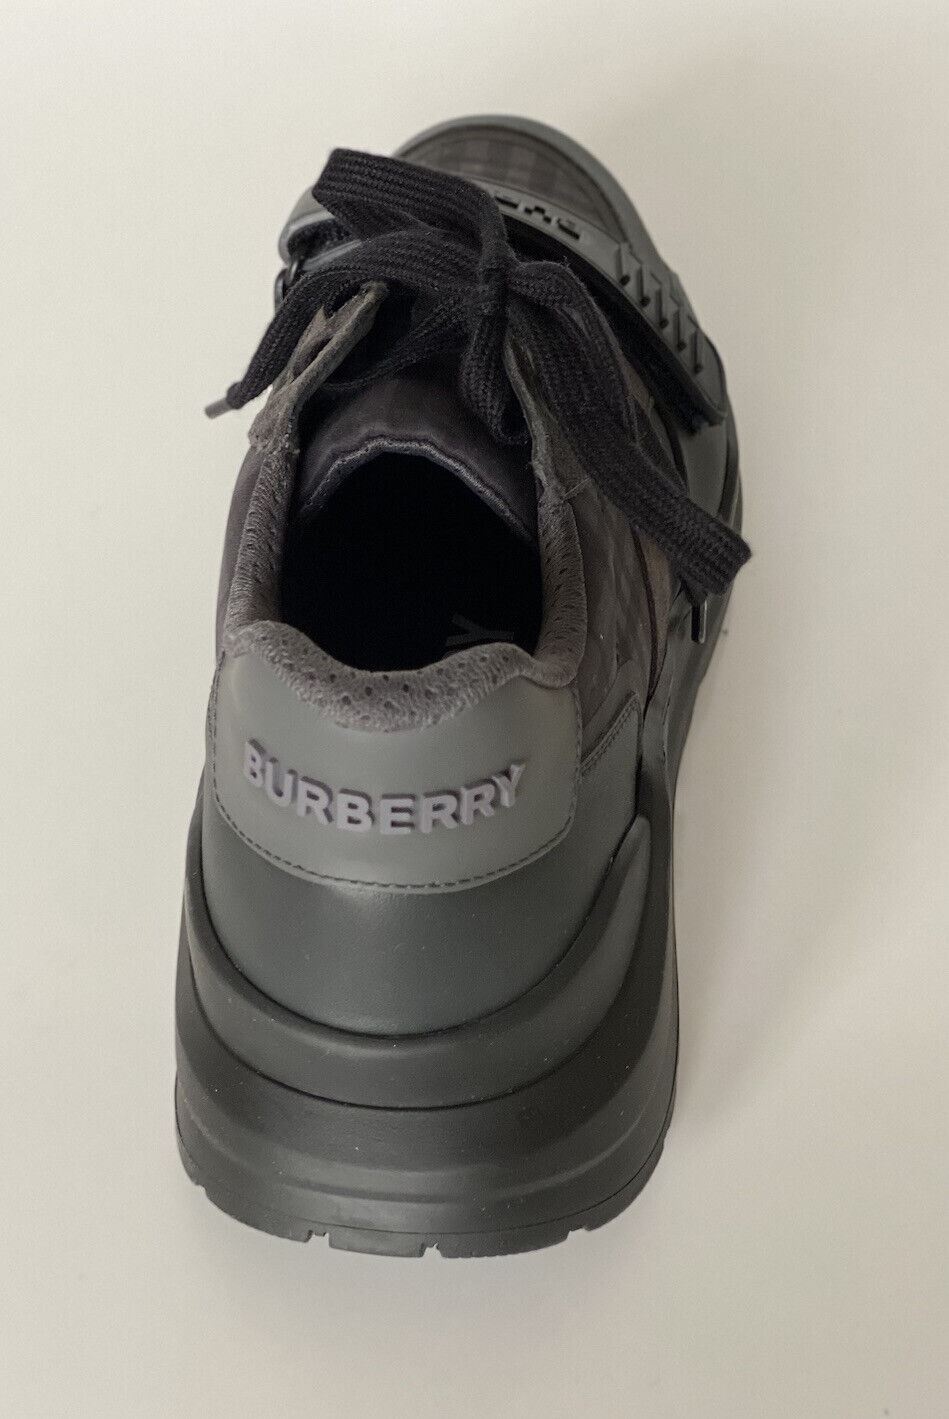 NIB Burberry Ramsey Check Herren-Sneaker in Dunkelkohle 13 US (46 Eu) 8042200 IT 